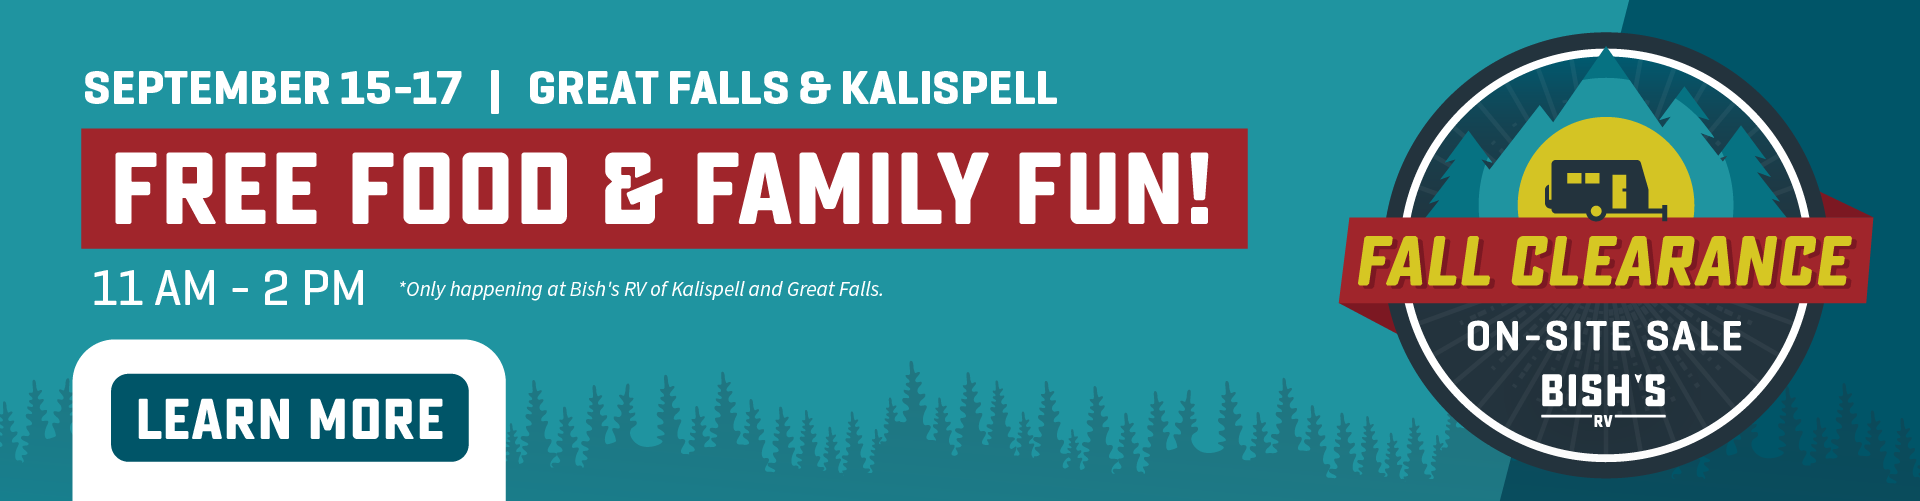 Kalispell & Great Falls - free food and fun